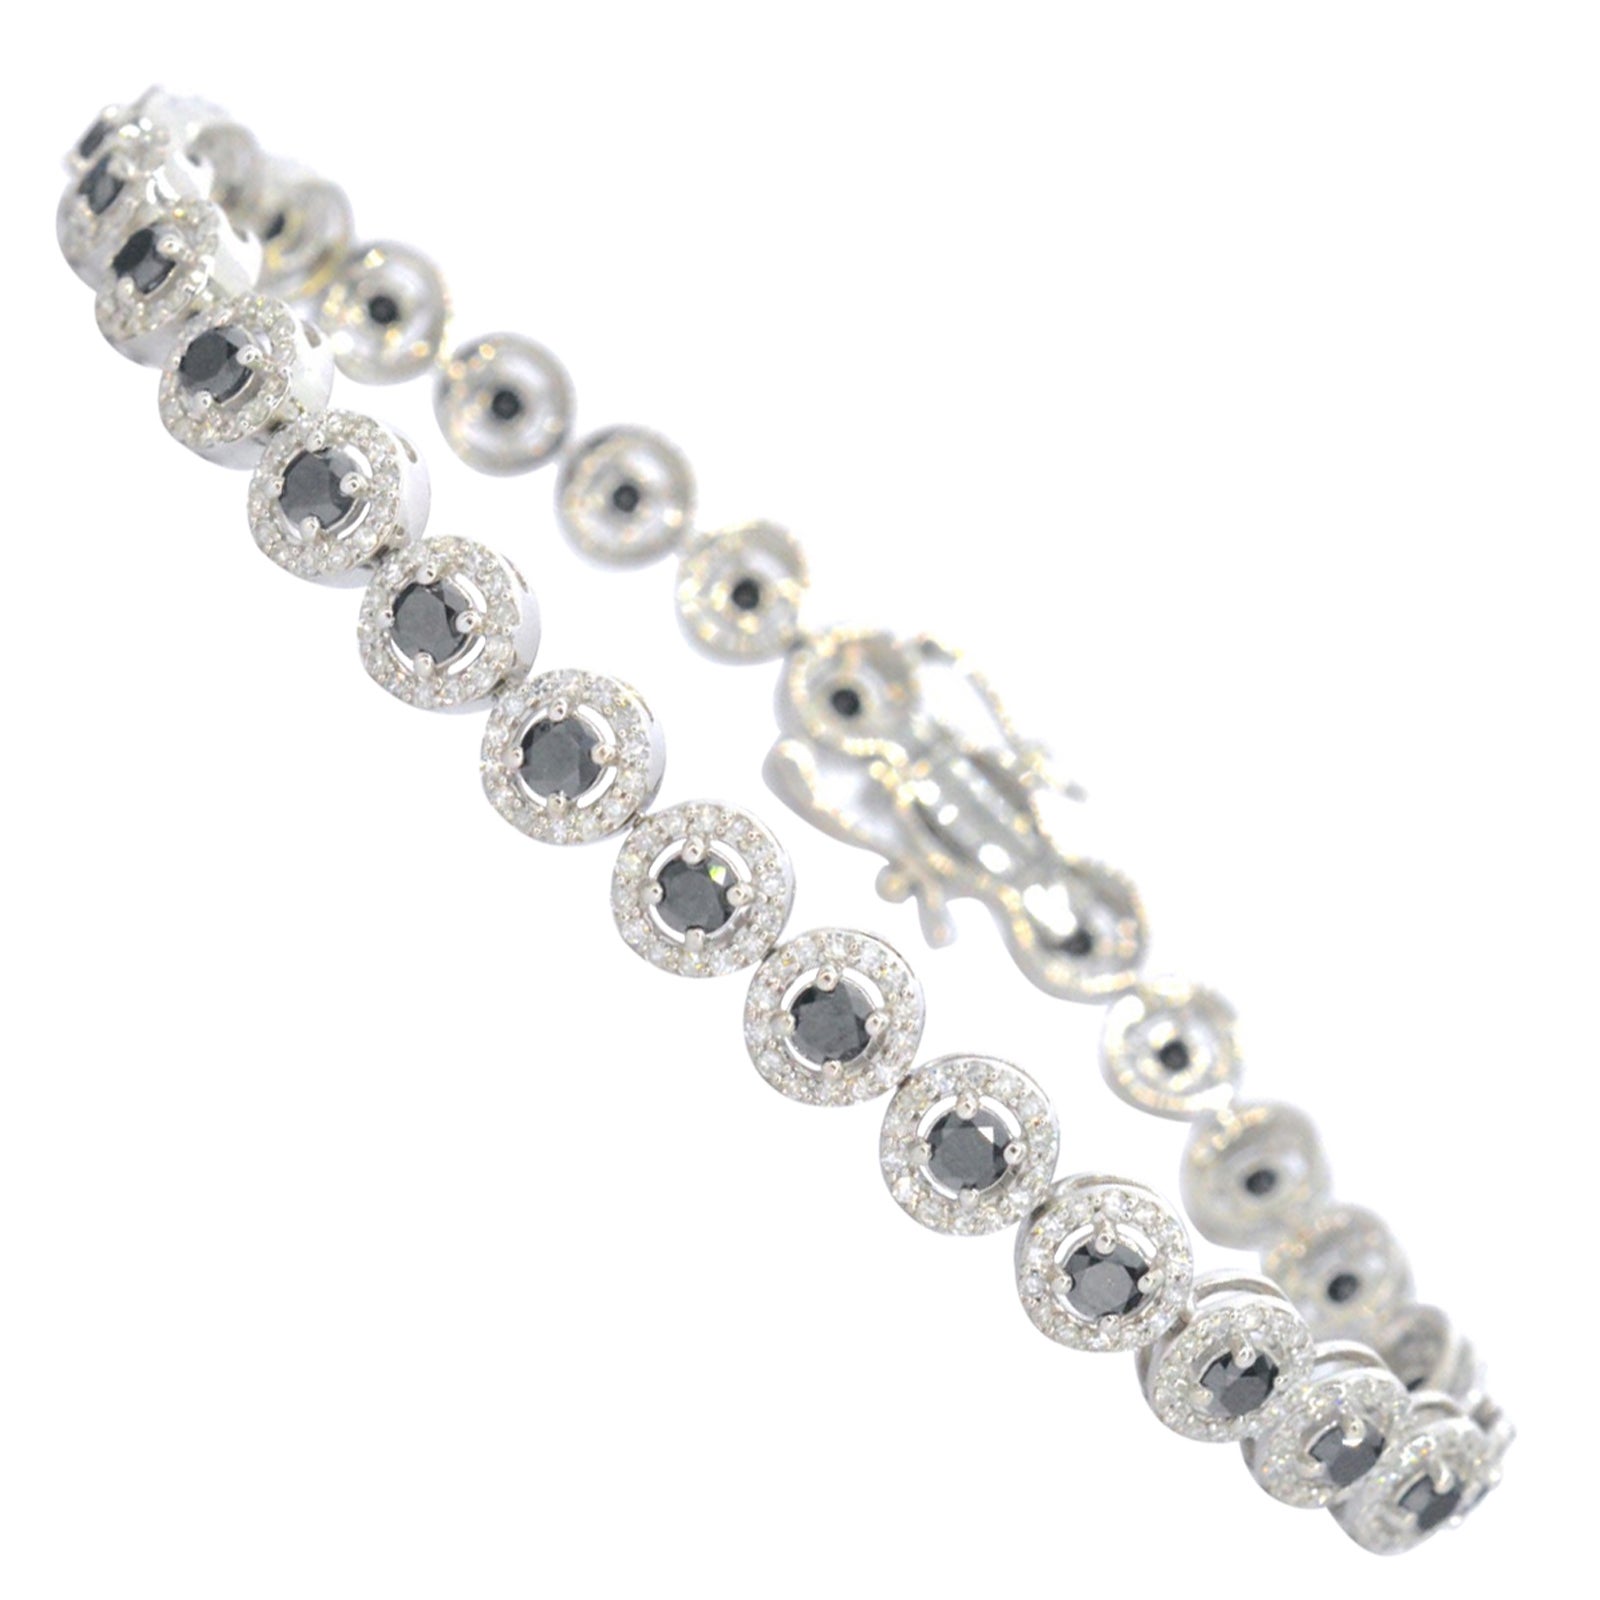 White Gold Bracelet with Diamonds and Brilliants 5.80 Carat